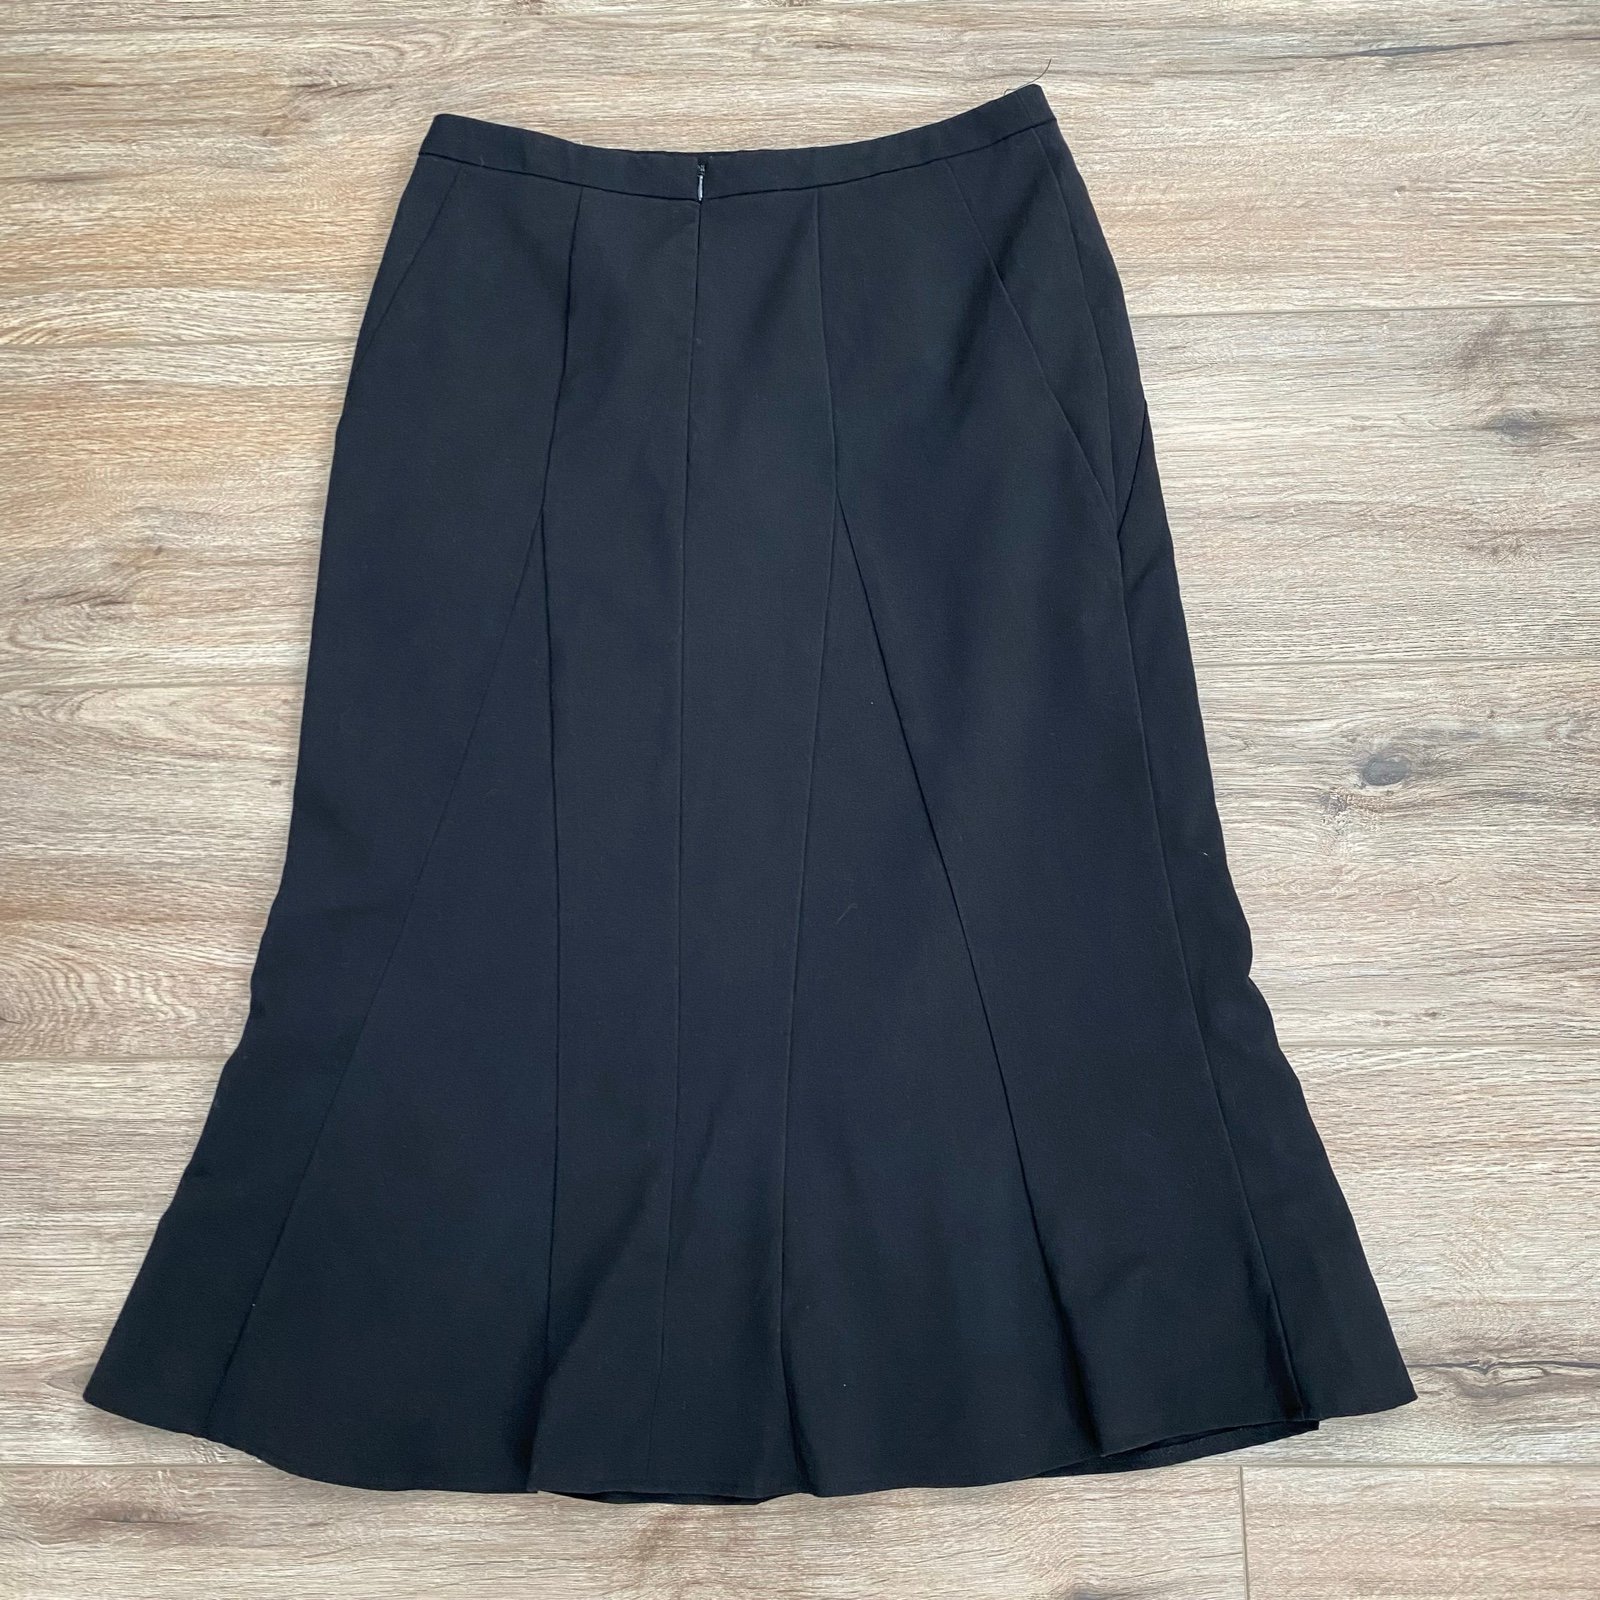 large selection Worthington Size 10 Women’s Black Maxi Skirt lMnnAbYPG outlet online shop